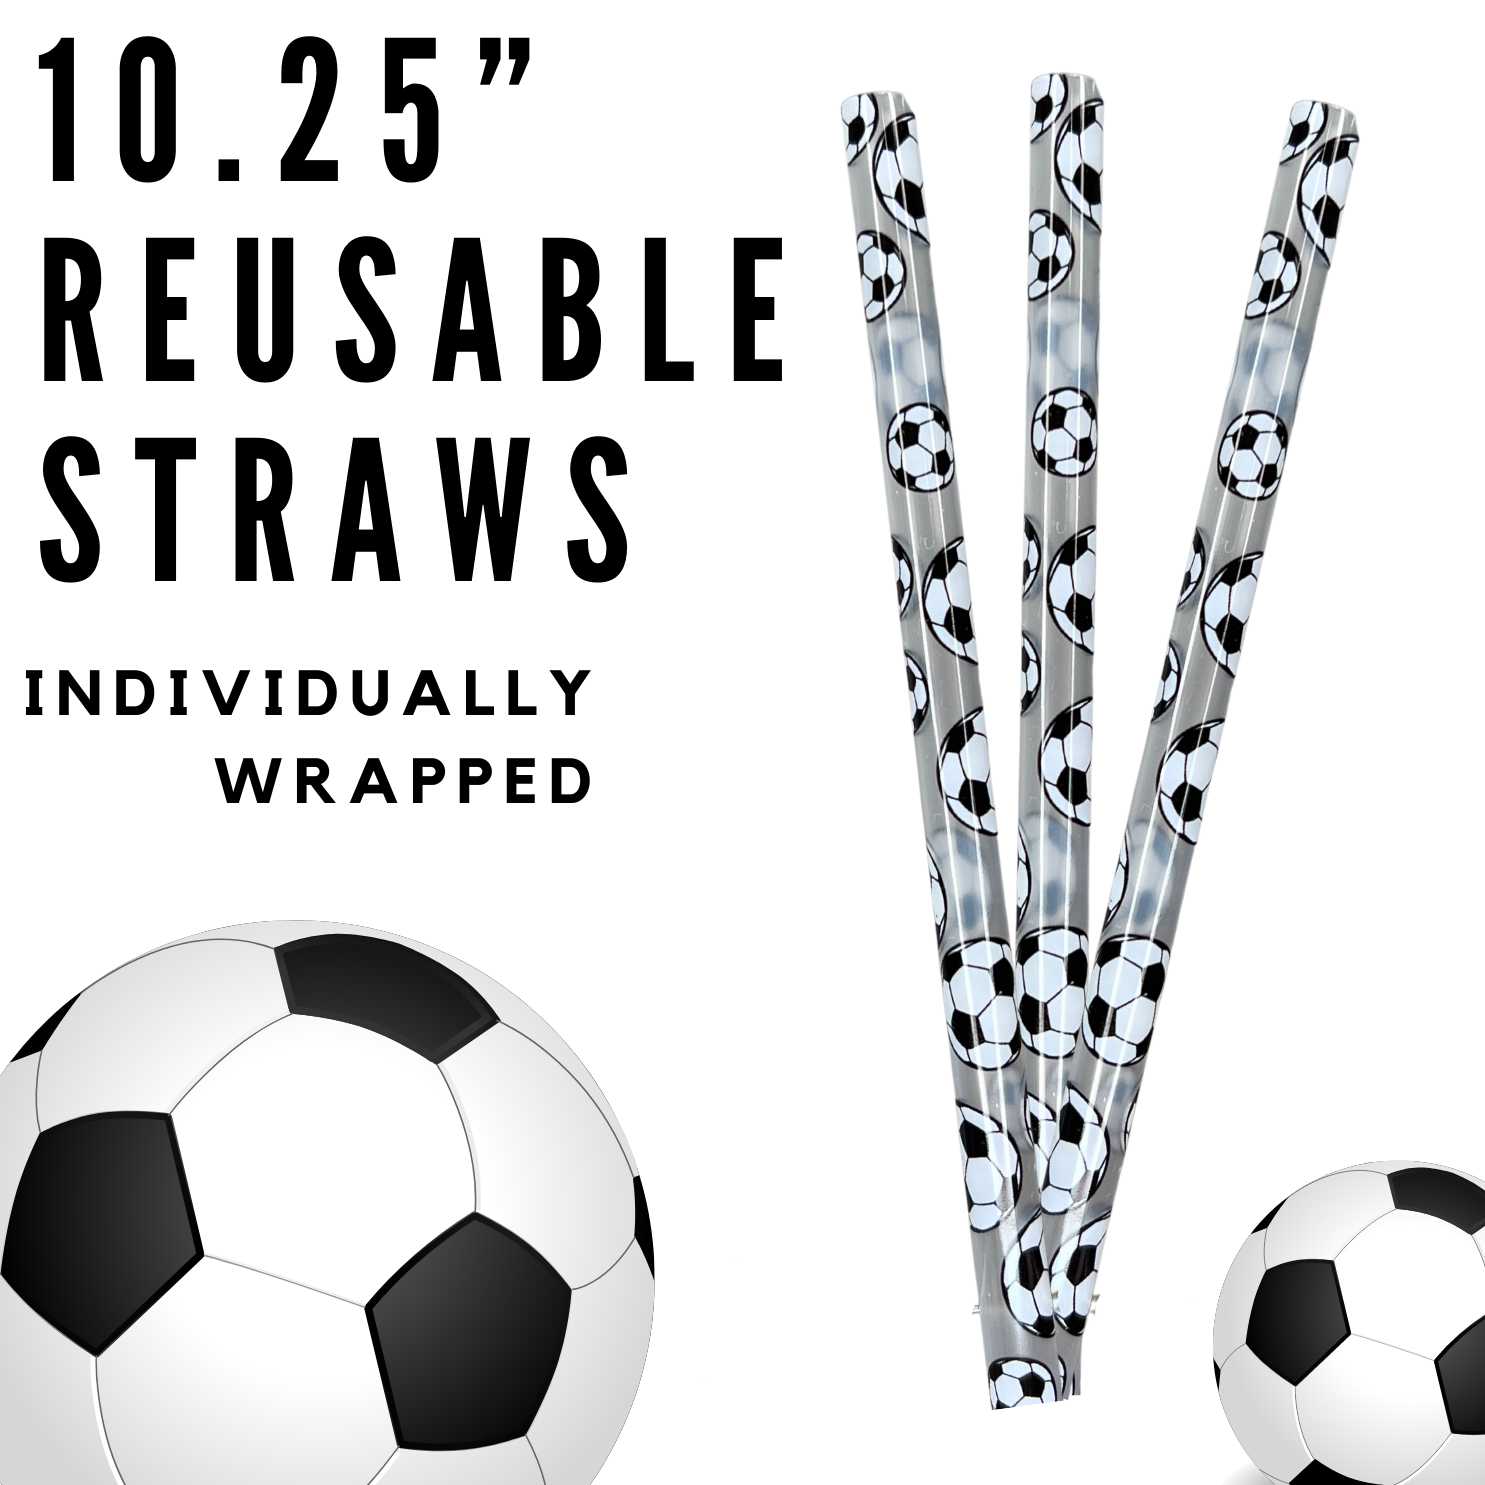 Reusable Straws Get it now - Kim's Korner Wholesale